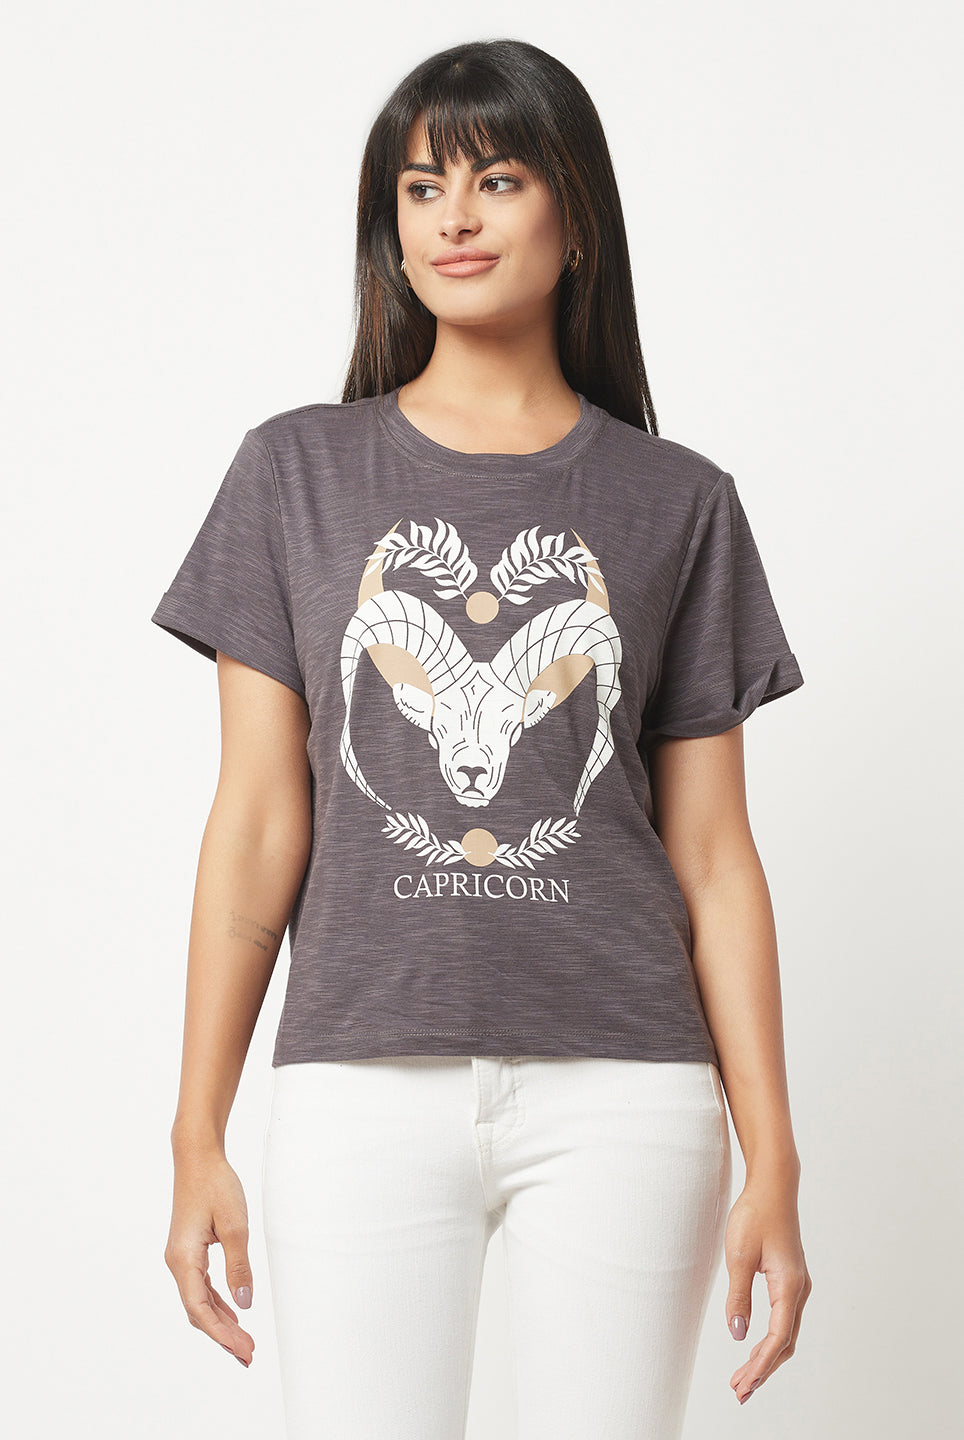 Capricorn Zodiac Sign T-shirt